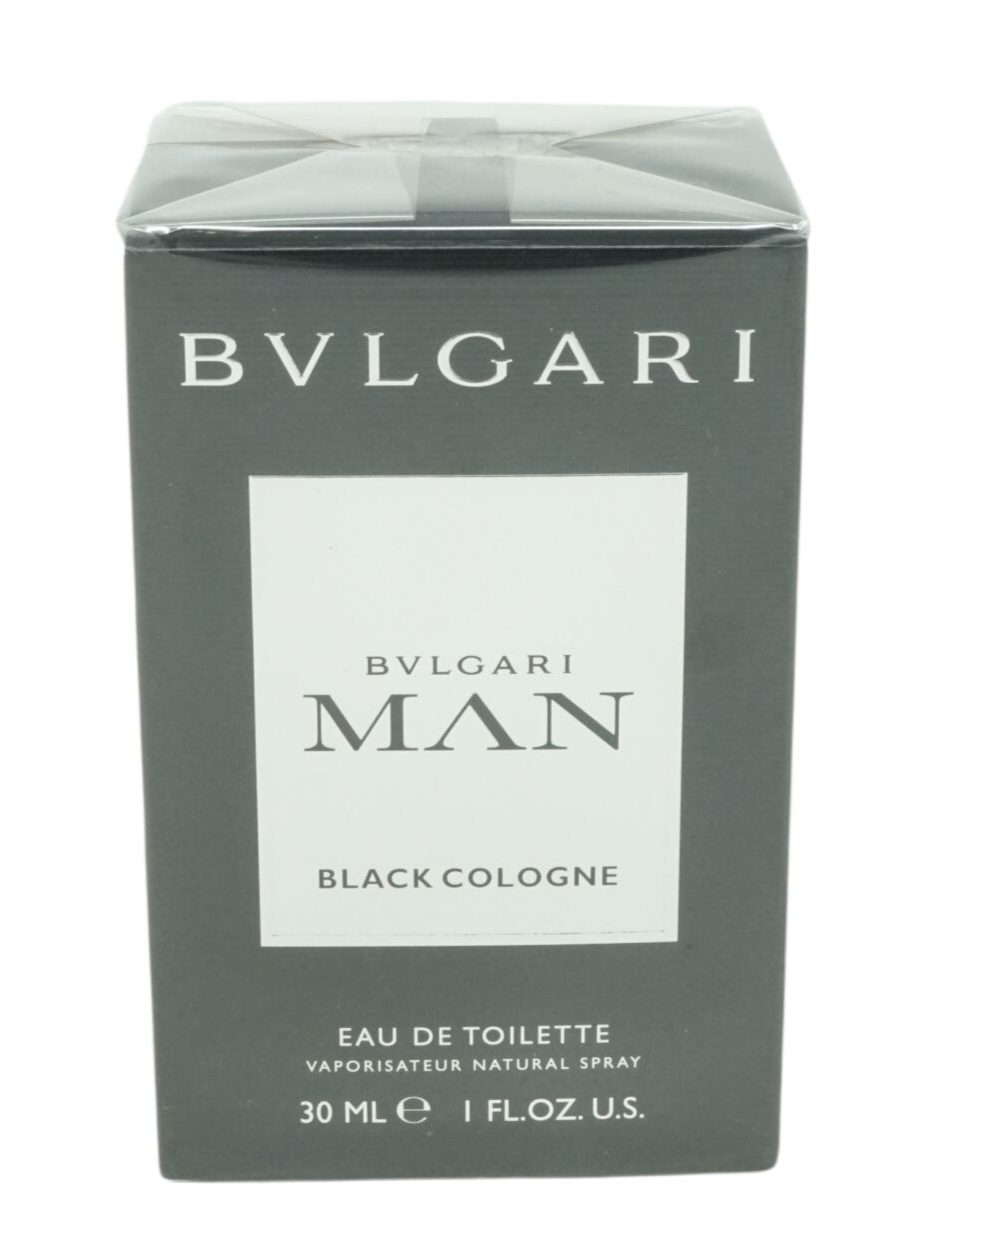 BVLGARI Eau de Toilette Bvlgari Man Black Cologne Eau de Toilette Spray 30ml